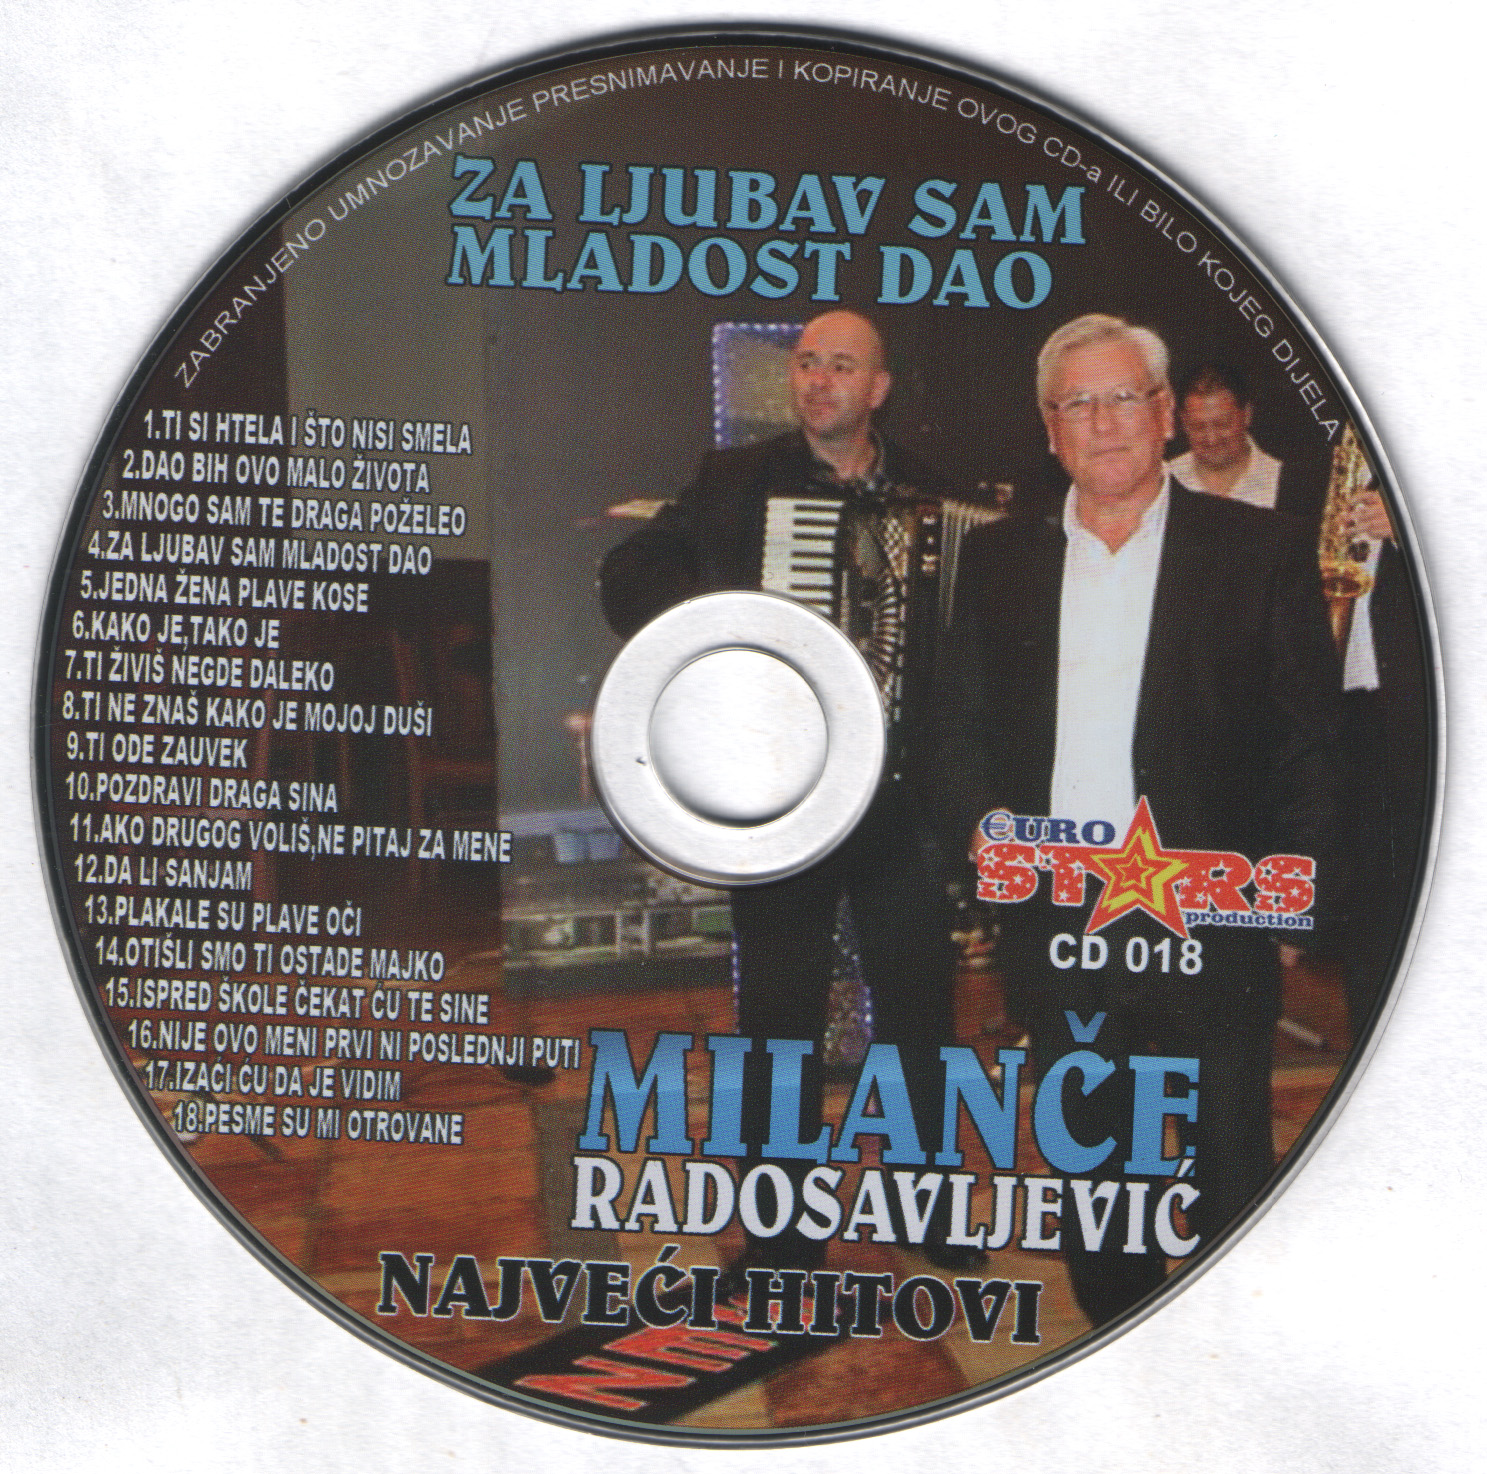 Milance Radosavljevic CD